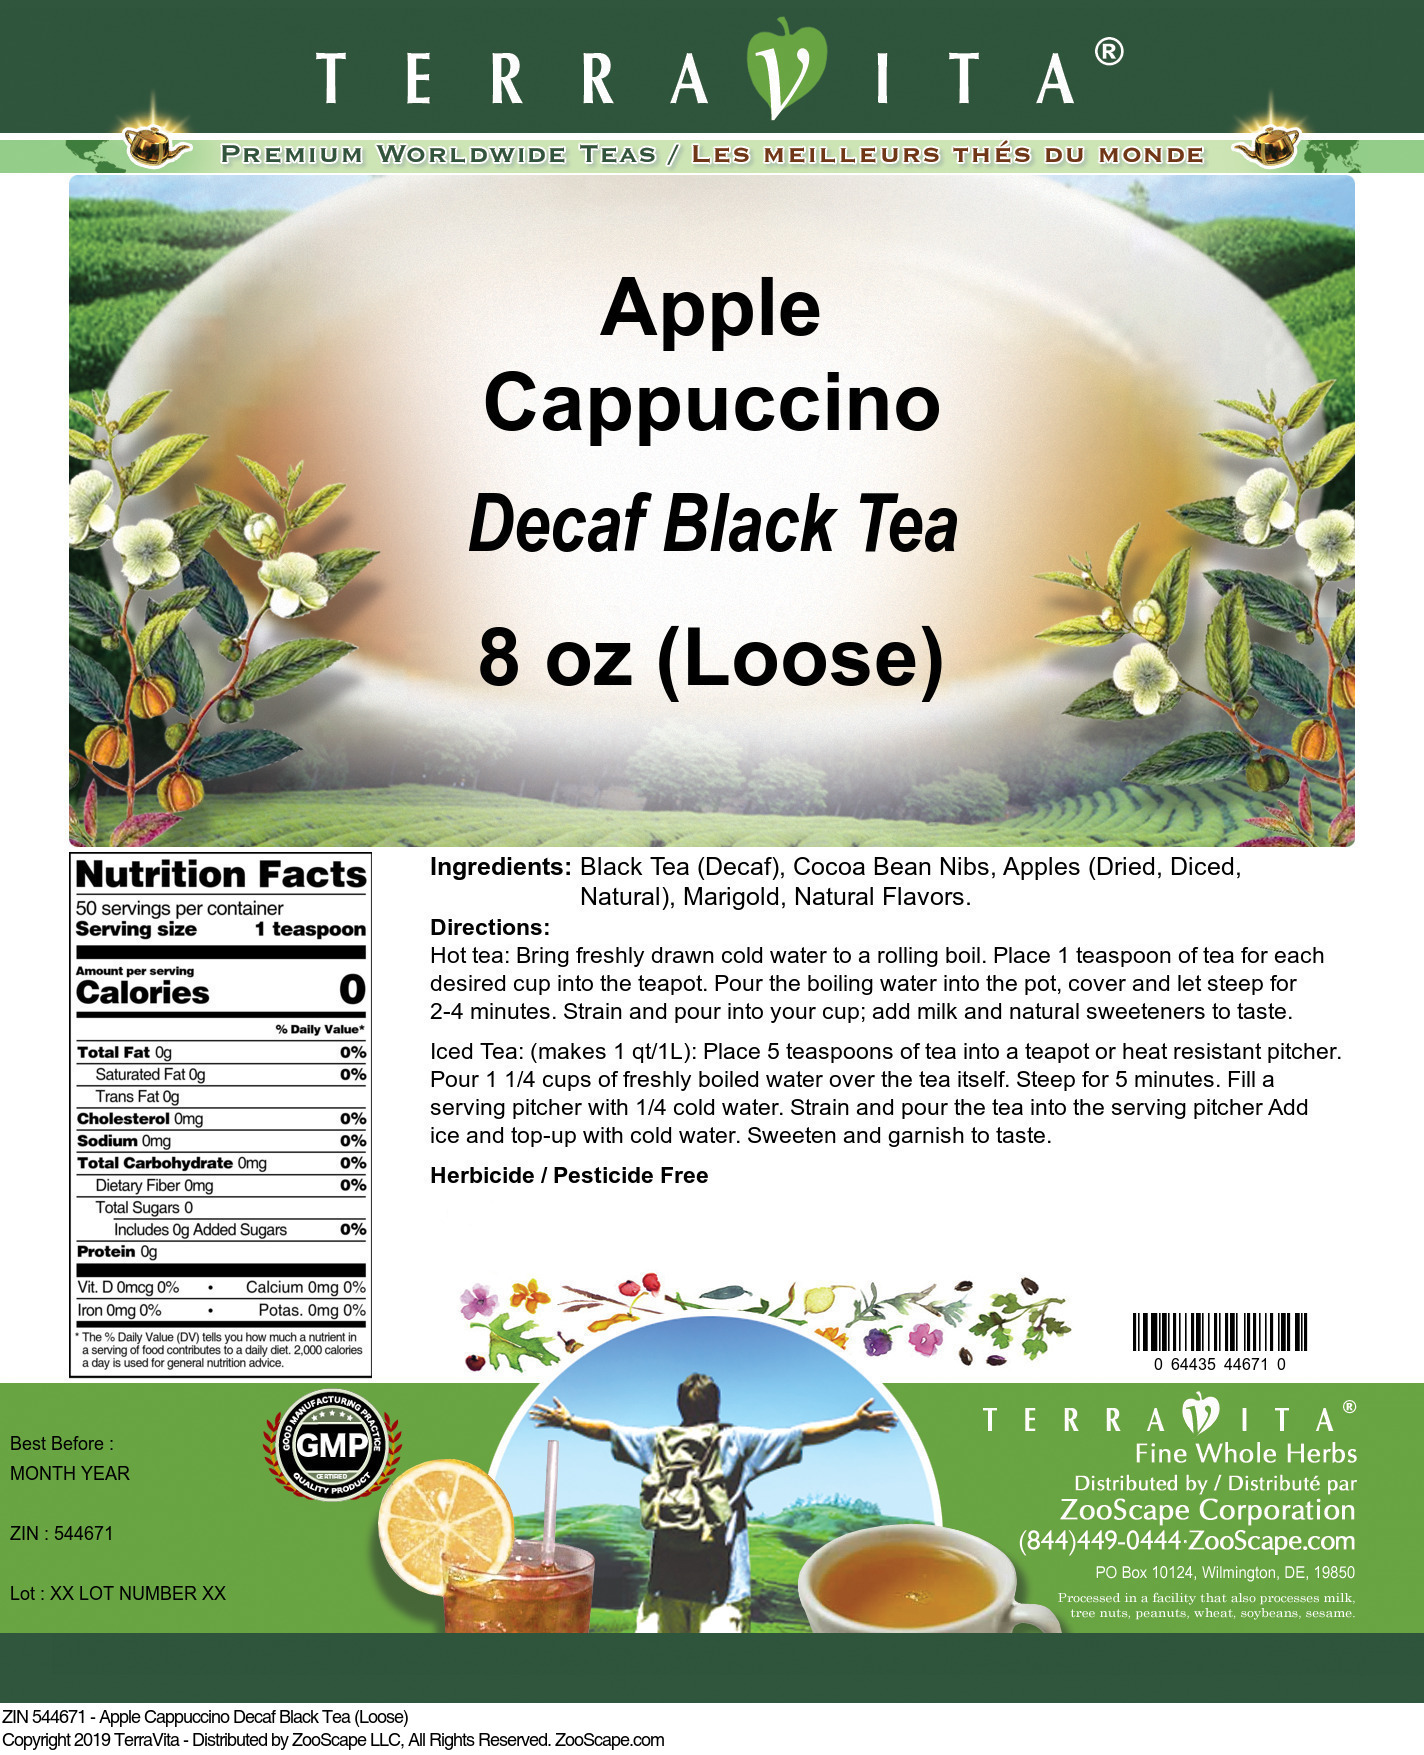 Apple Cappuccino Decaf Black Tea (Loose) - Label